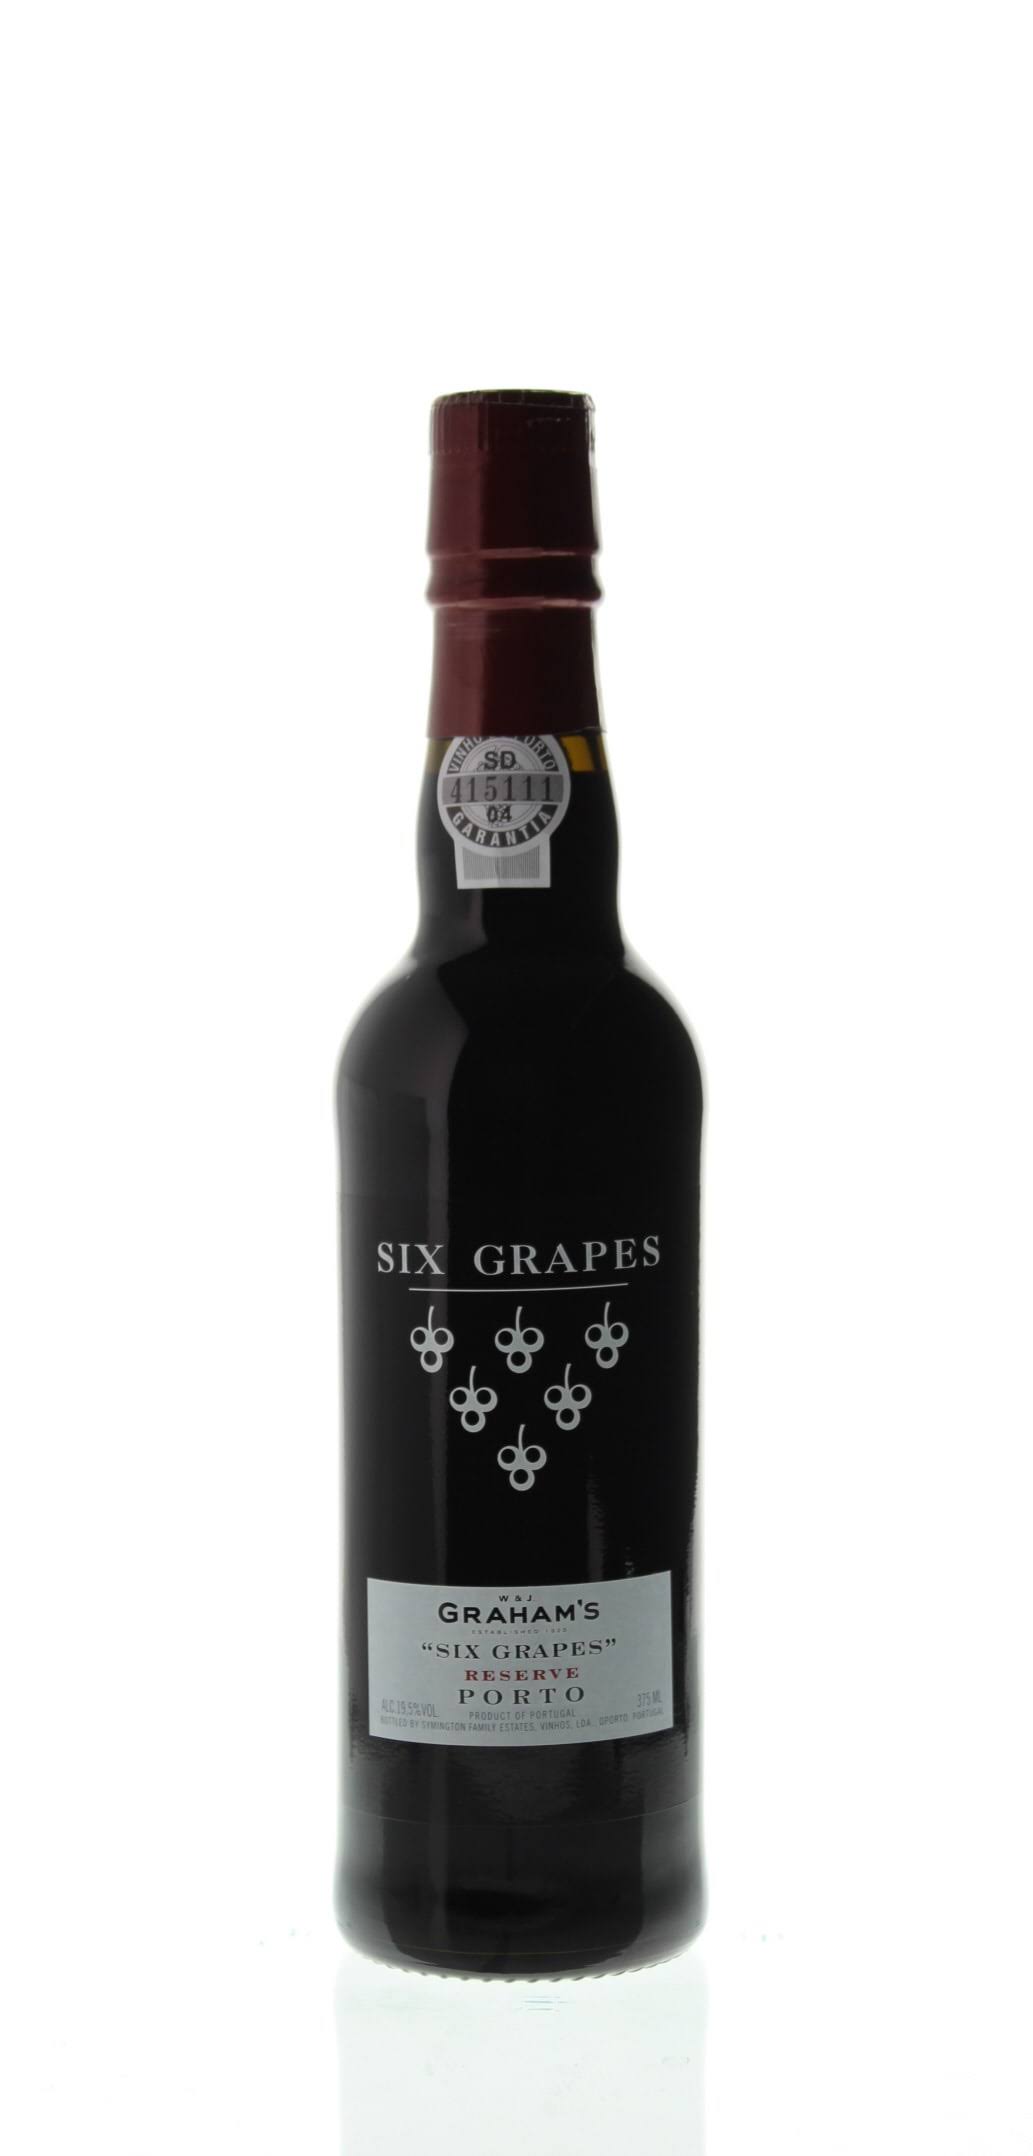 Graham's Port Six Grapes Reserve, Portugal (Vintage Varies) - 375 ml bottle